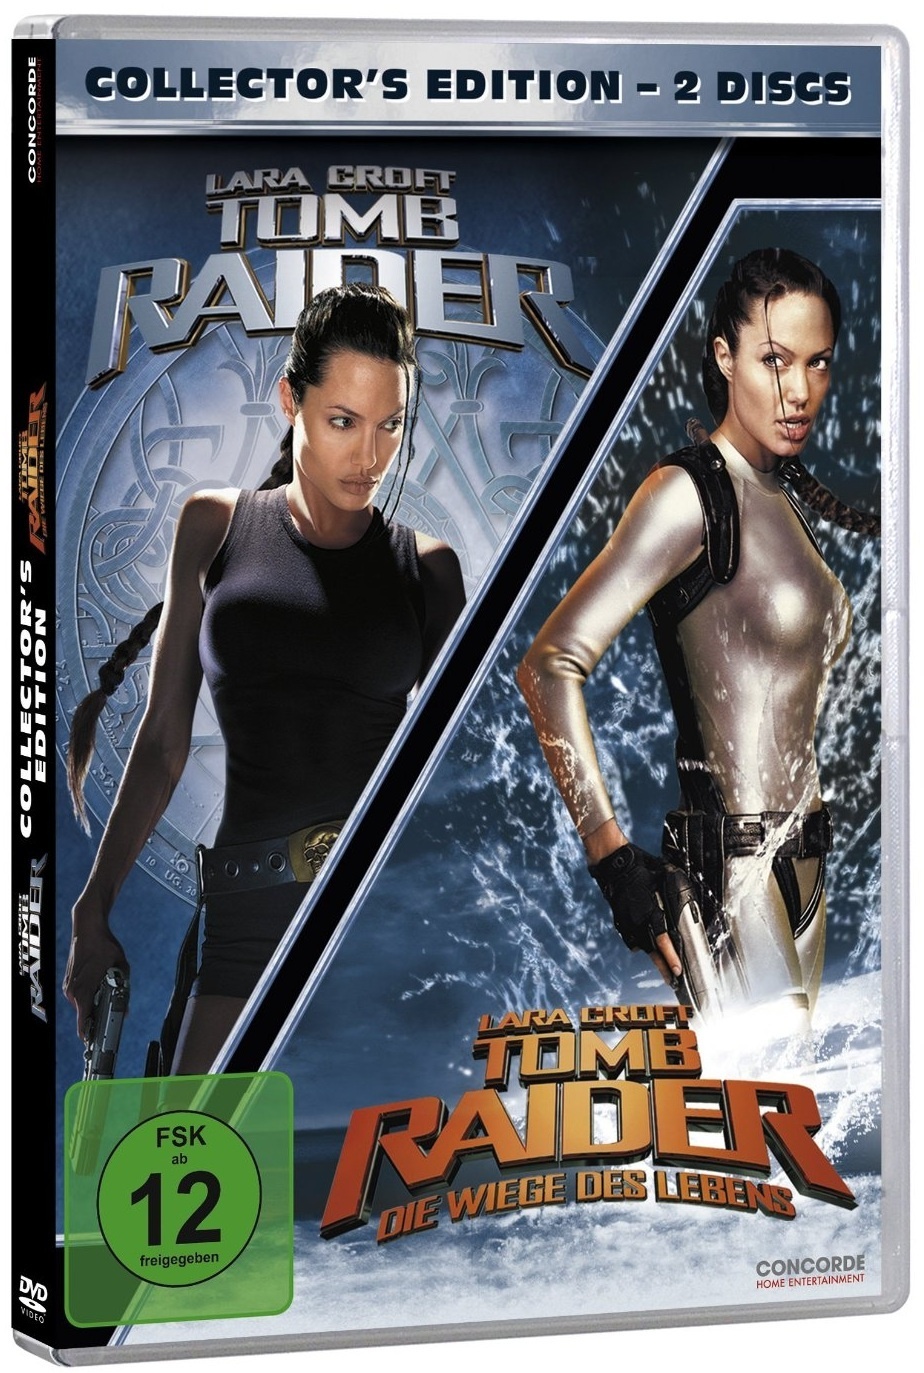 Lara Croft: Tomb Raider / Lara Croft: Tomb Raider - Die Wiege Des Lebens (DVD)